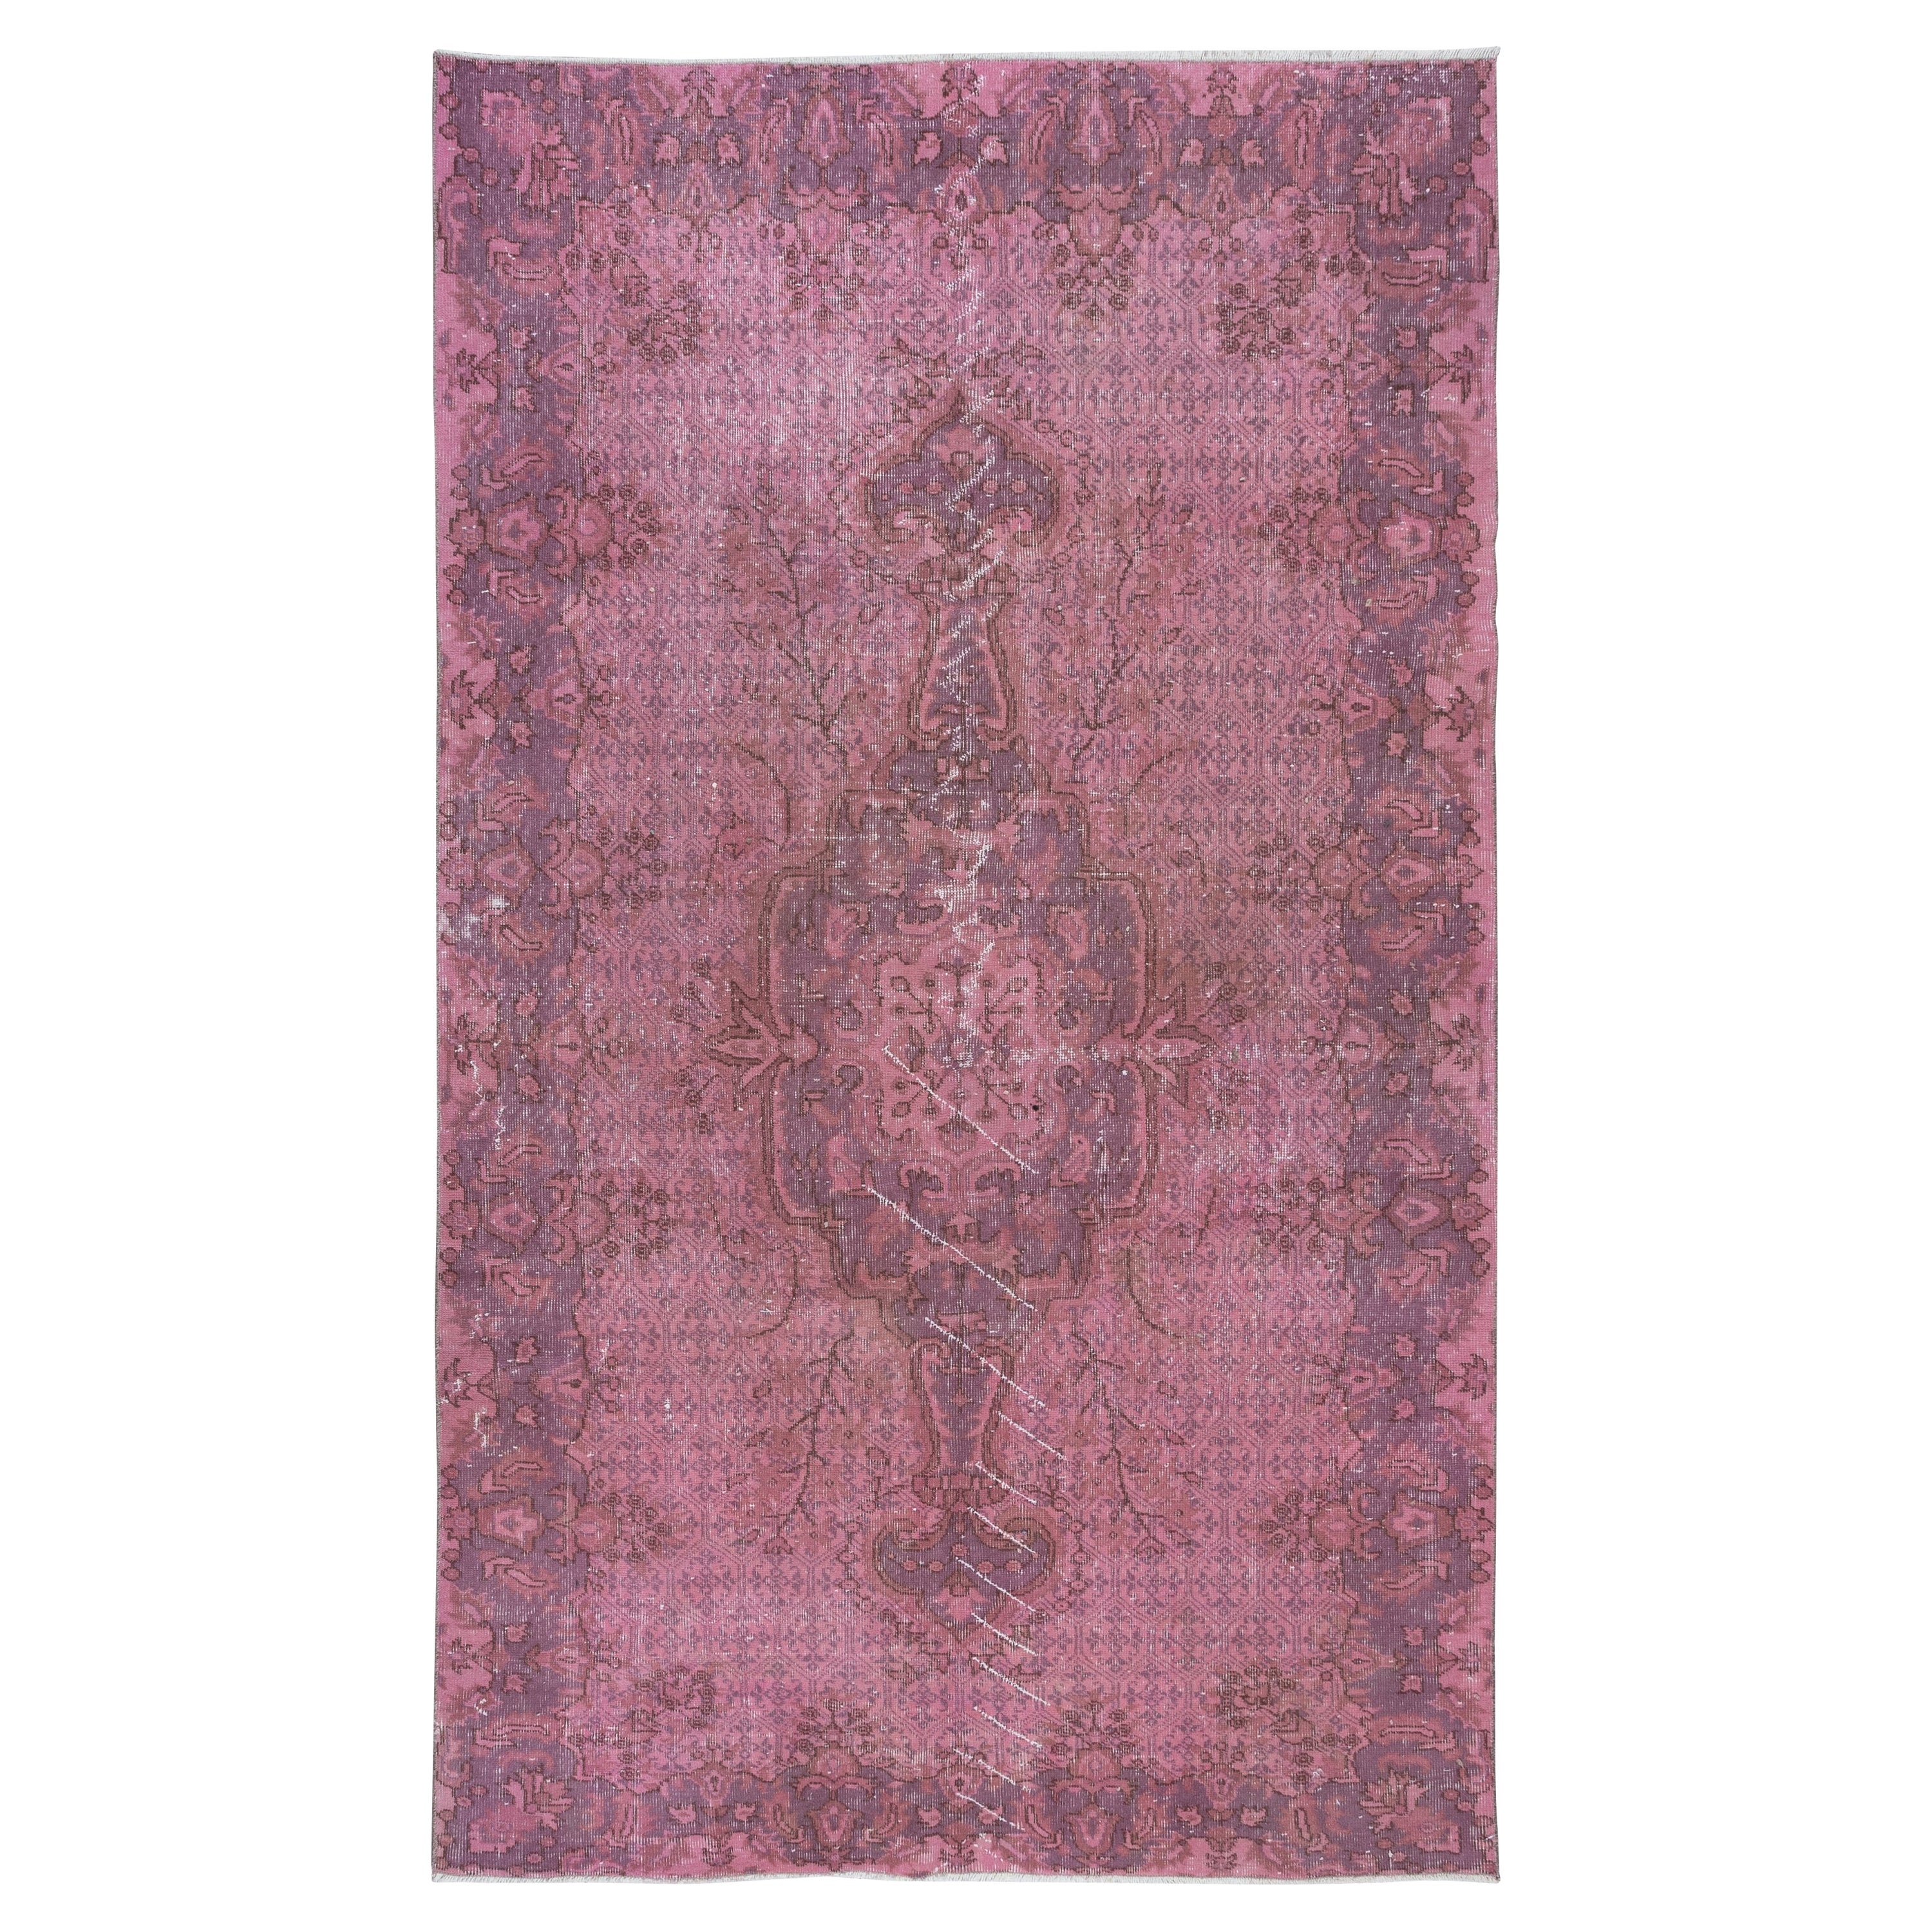 5.4x9 Ft Pink & Violet Purple Handmade Area Rug from Turkey, Room Size Carpet